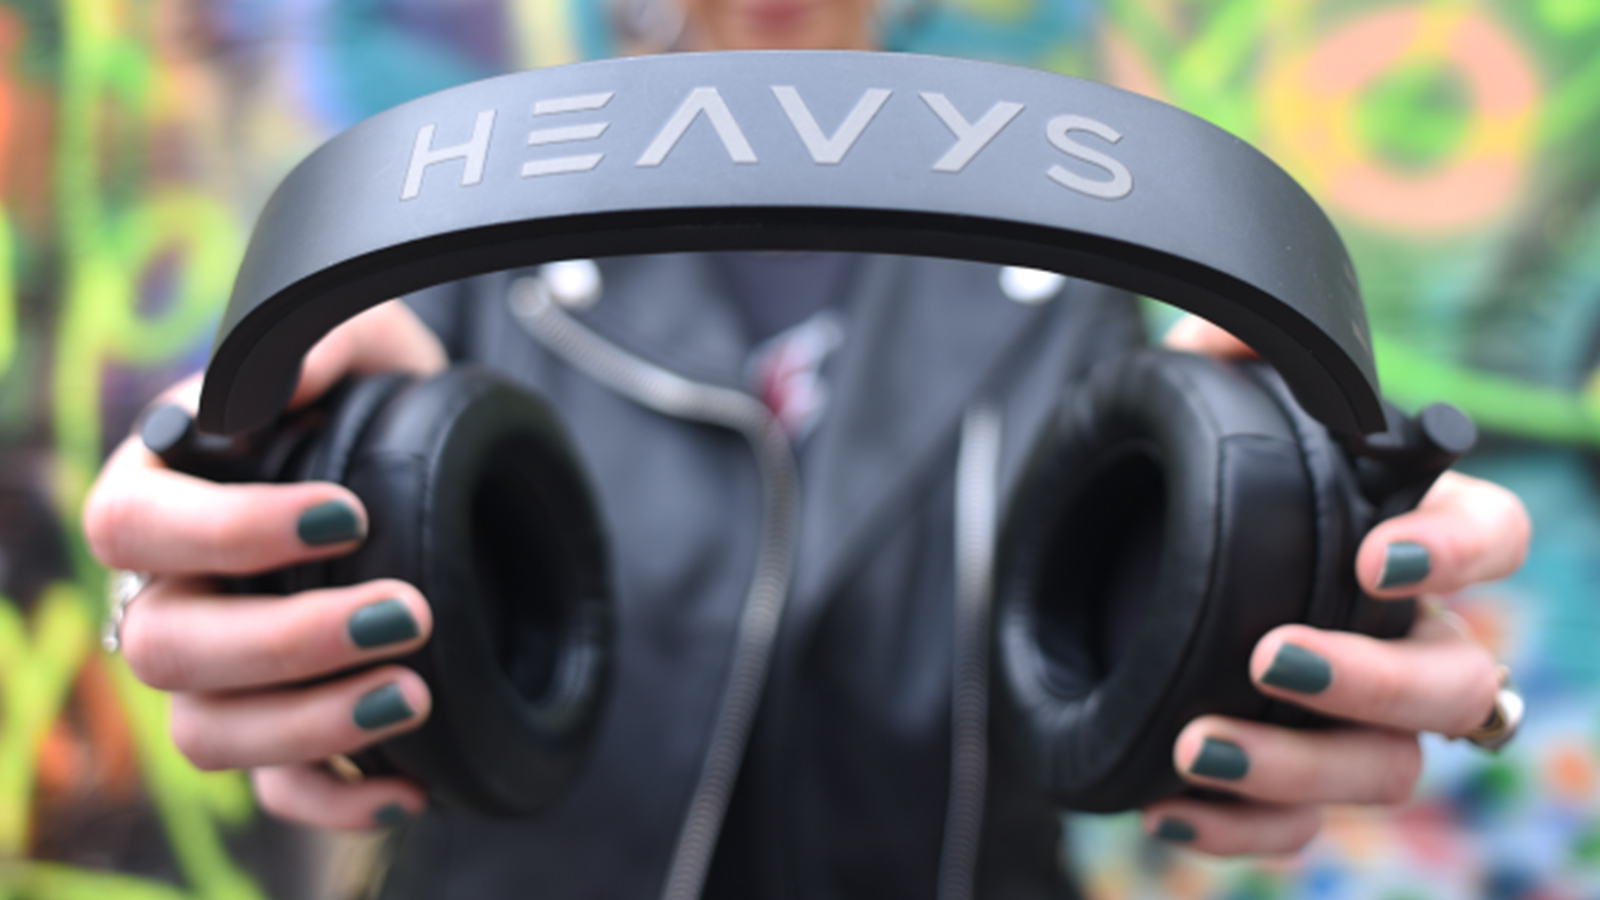 Heavys Headphones